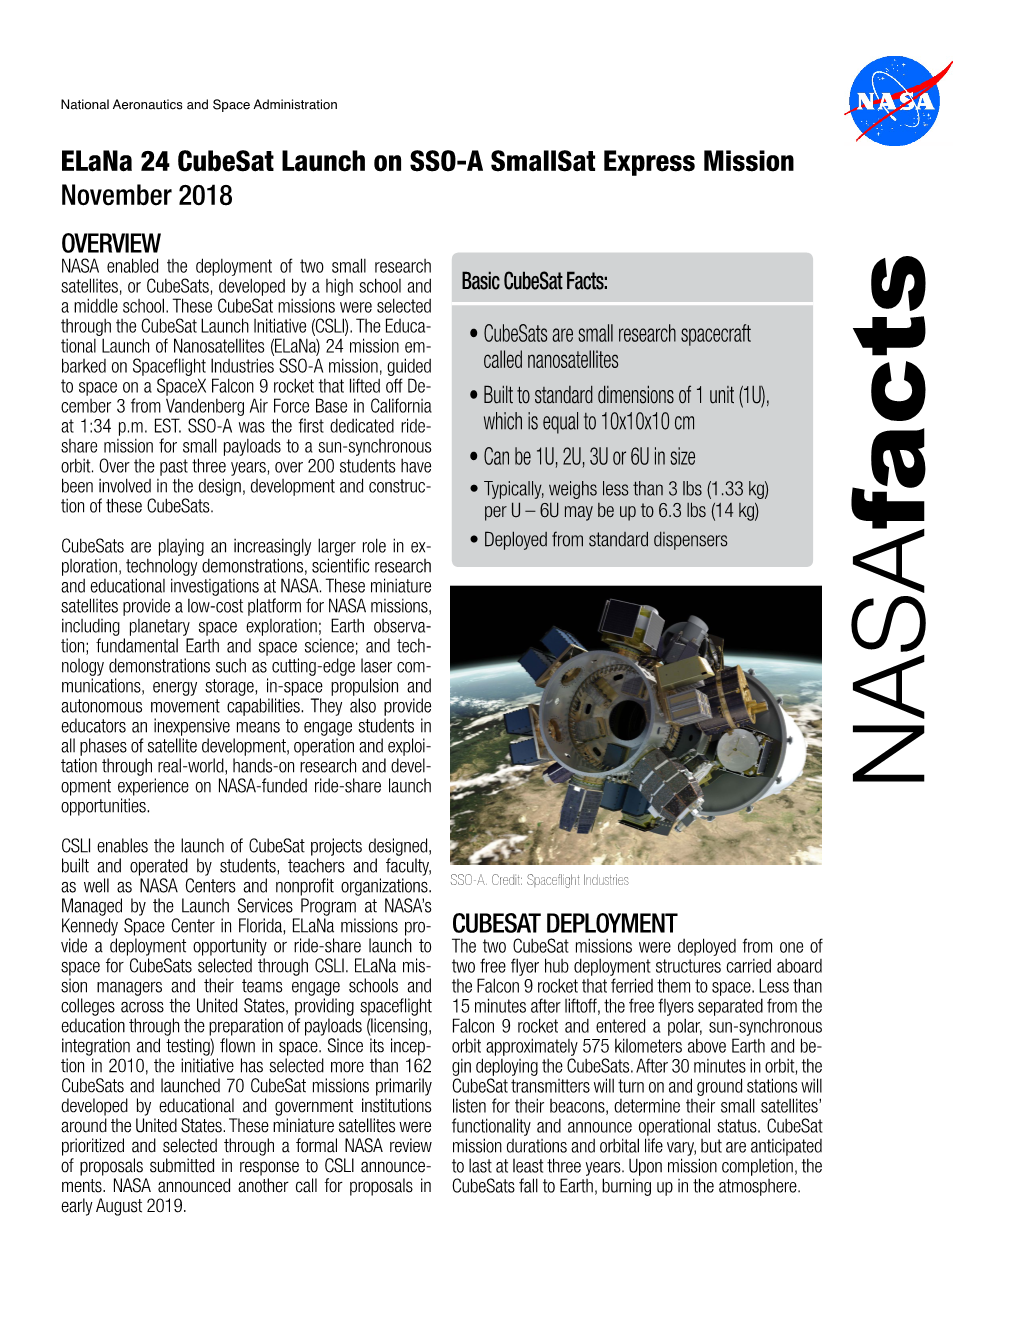 Elana 24 Cubesat Launch on SSO-A Smallsat Express Mission